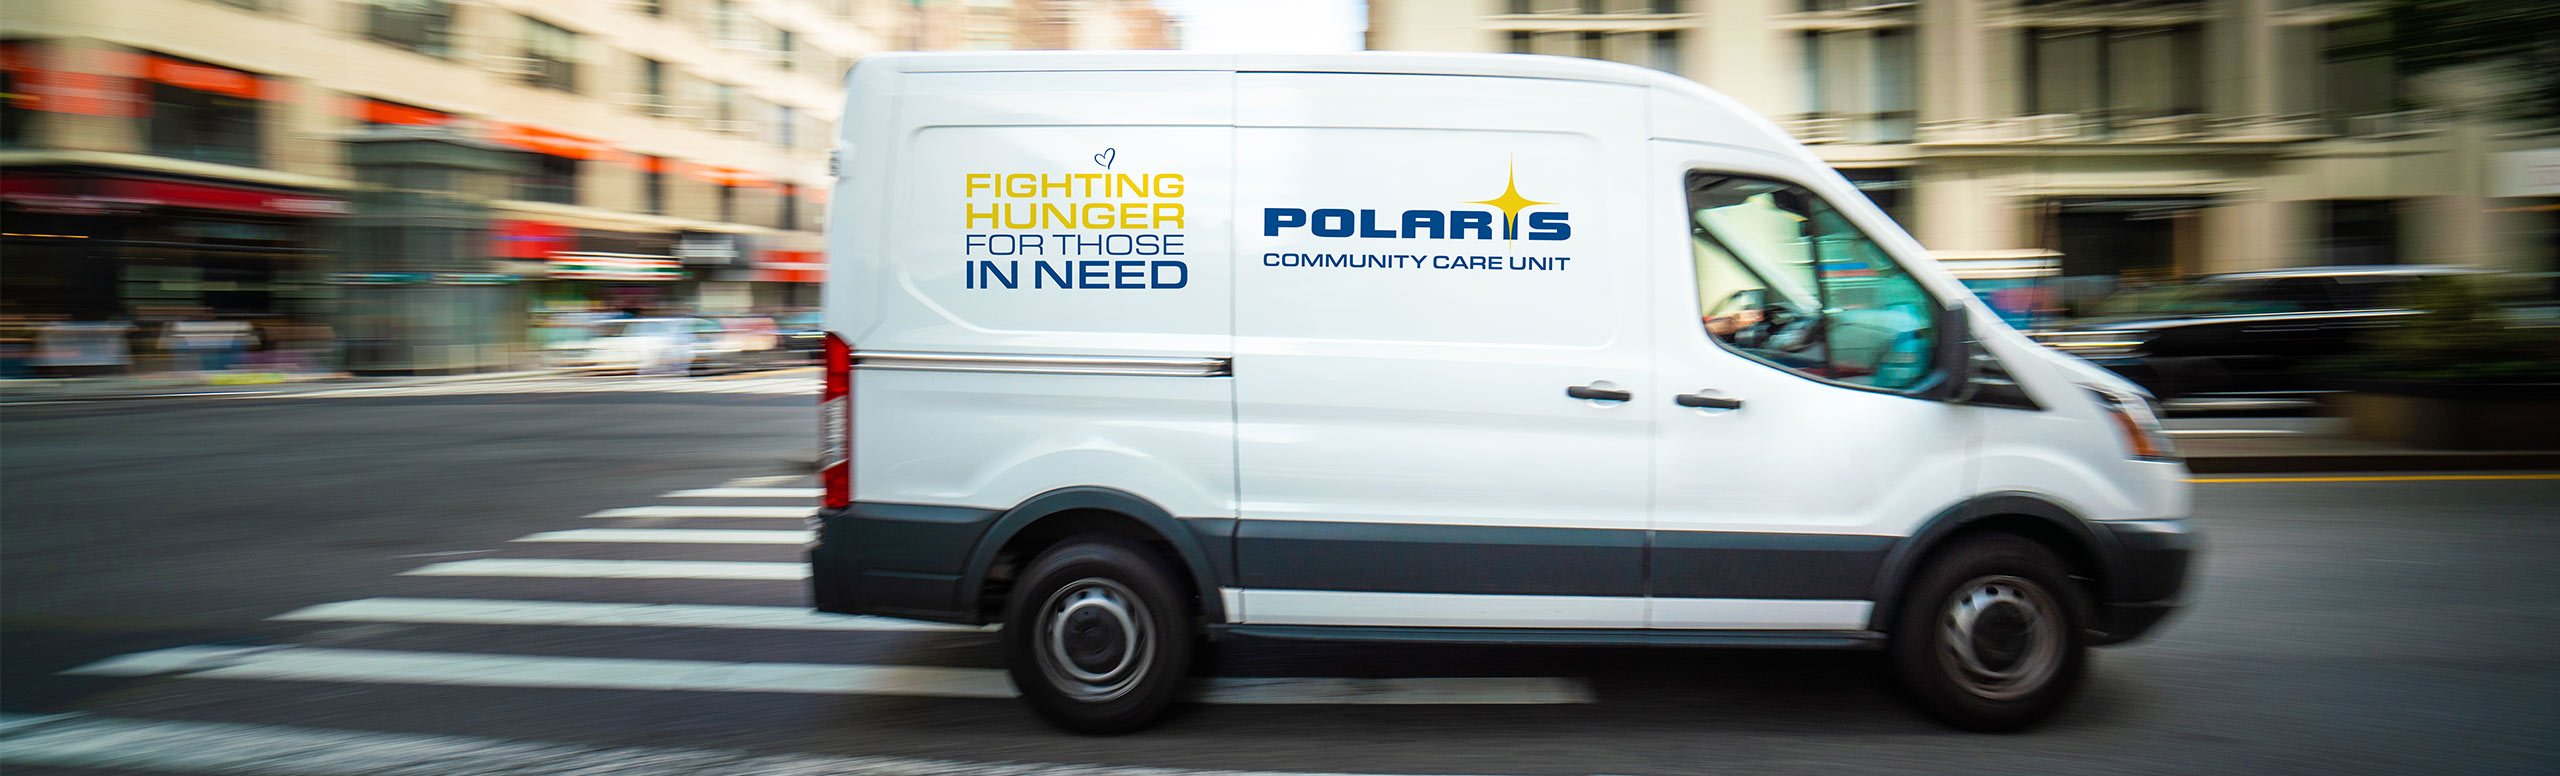 Polaris Community Care Unit van driving across Greater Toronto Area communities